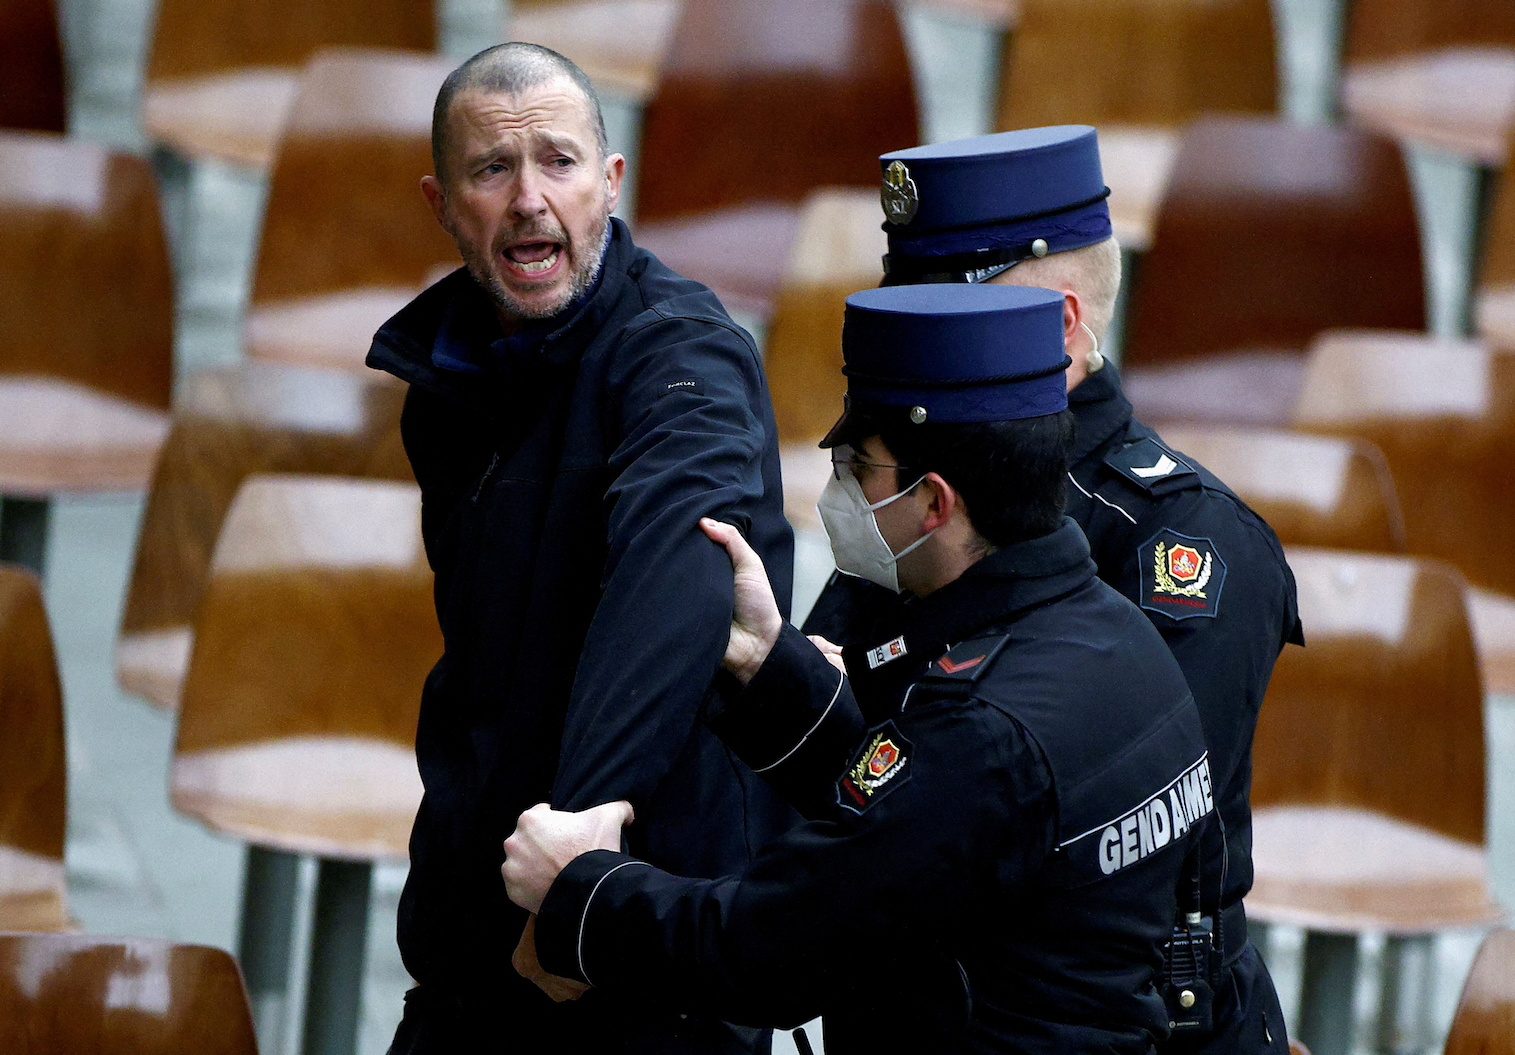 Shouting man interrupts papal audience, taken away by police